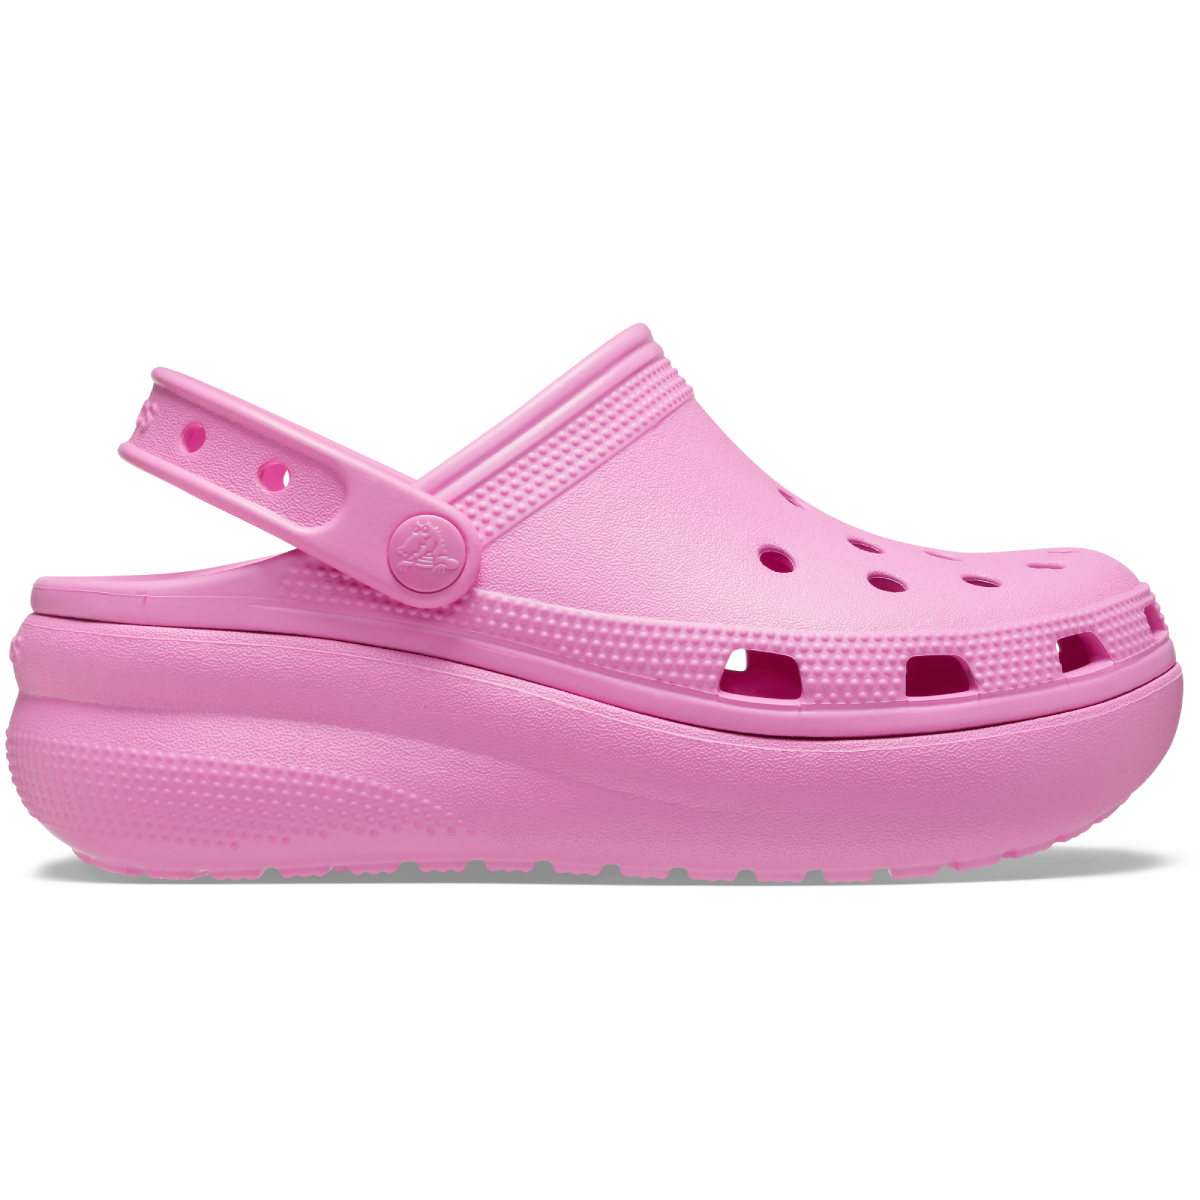 Classic Crocs Cutie Clog K - Taffy Pink